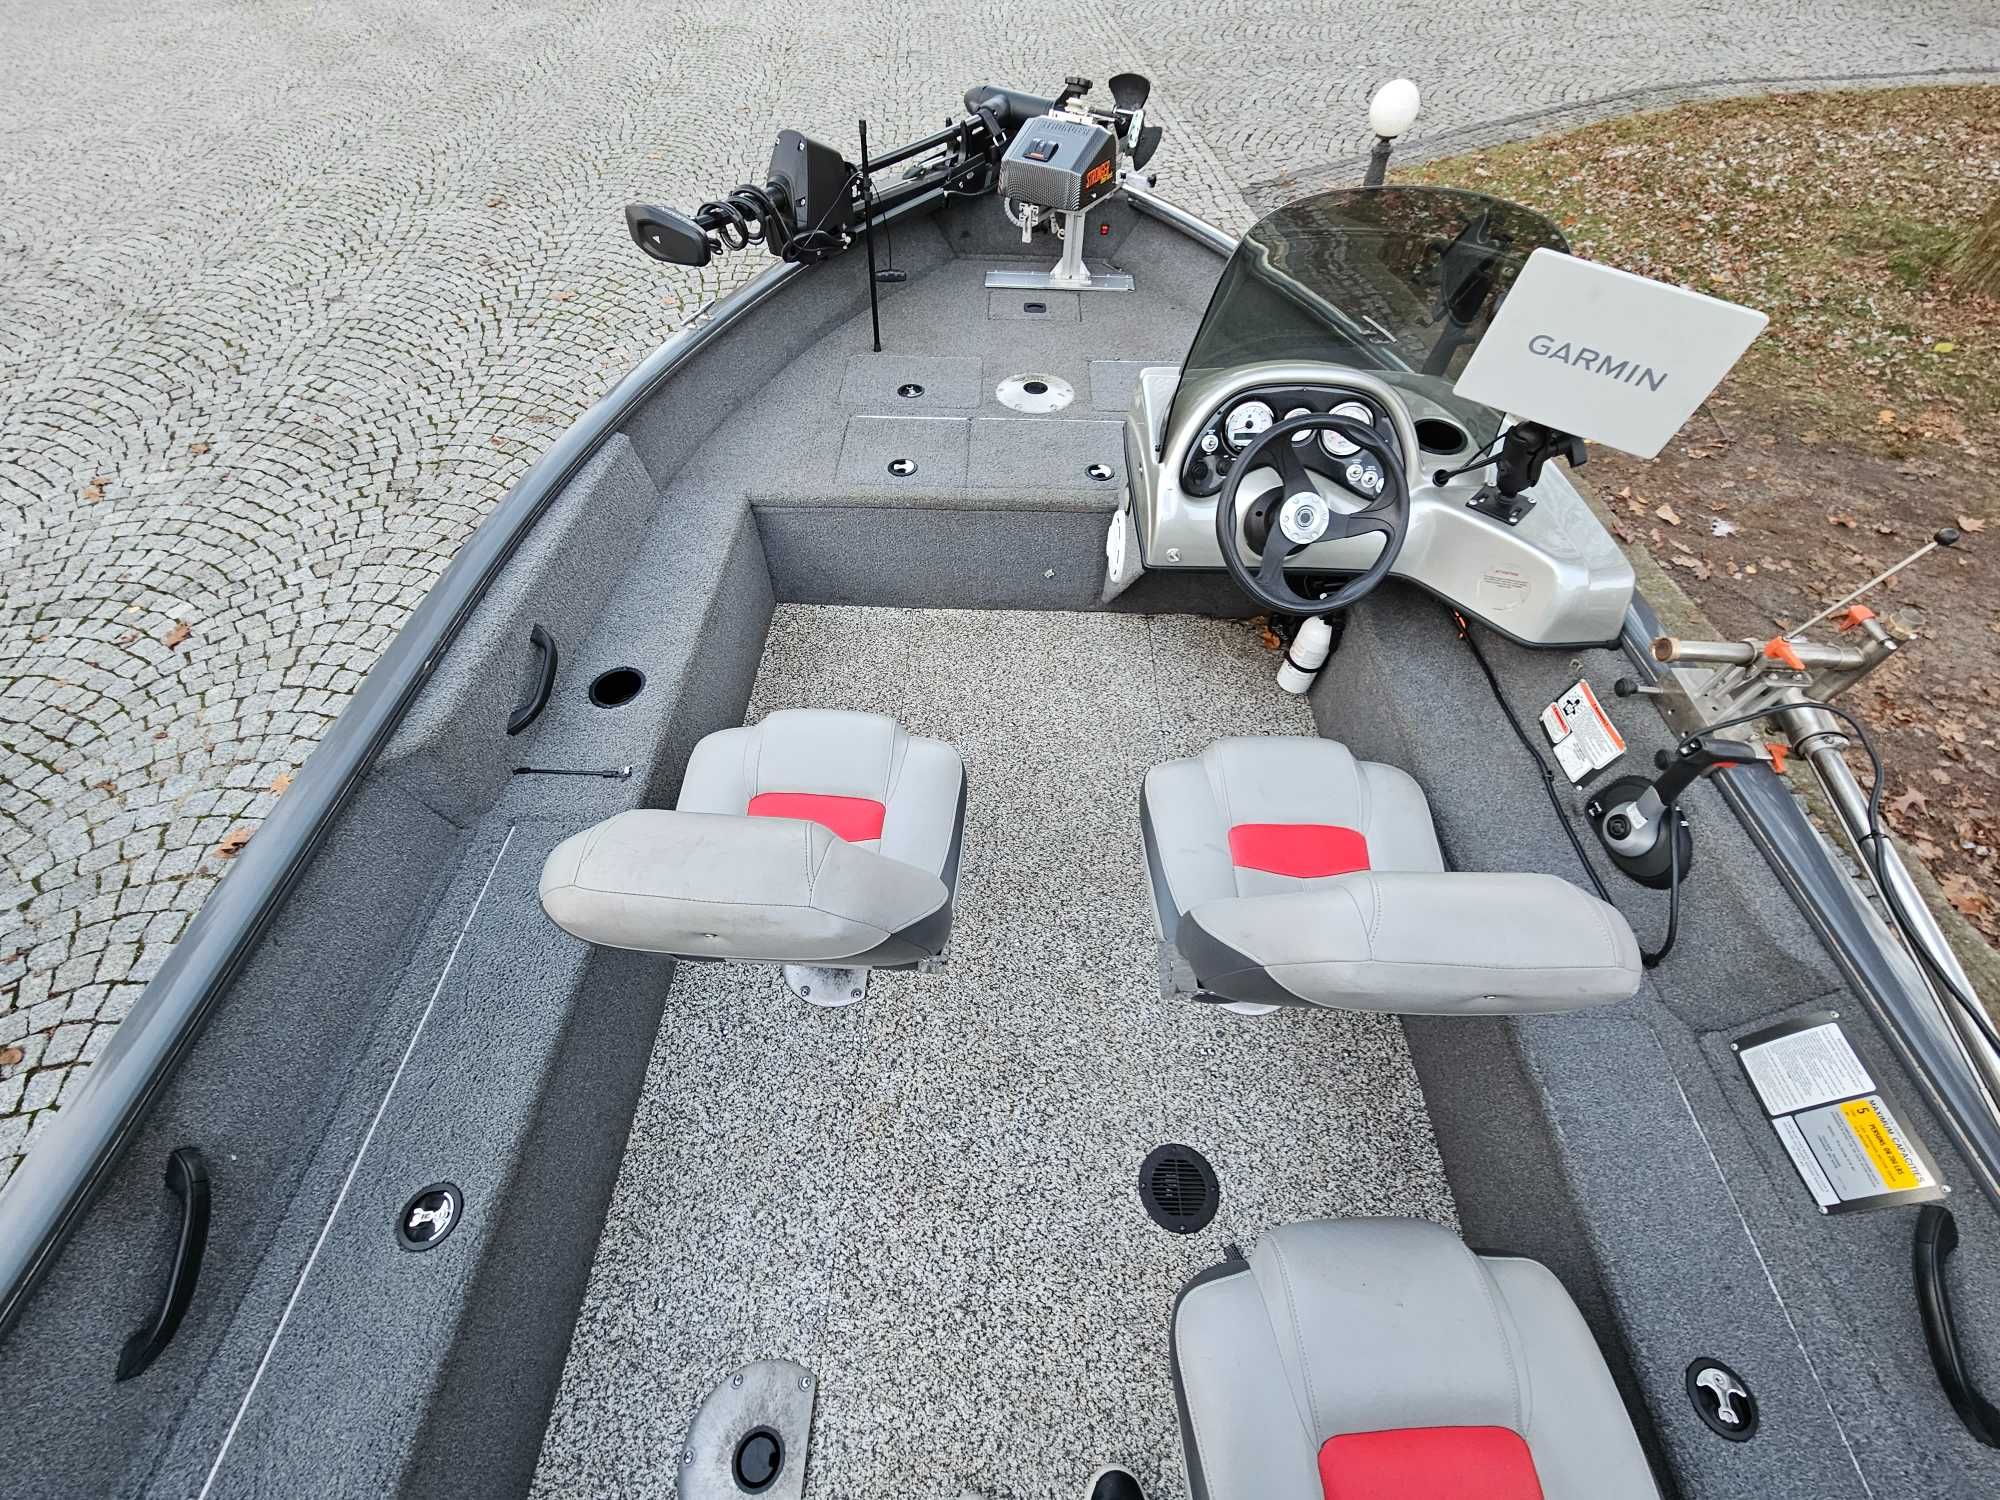 łódź wędkarska Tracker Pro V16 Guide dmc 750 DOPOSAŻONA